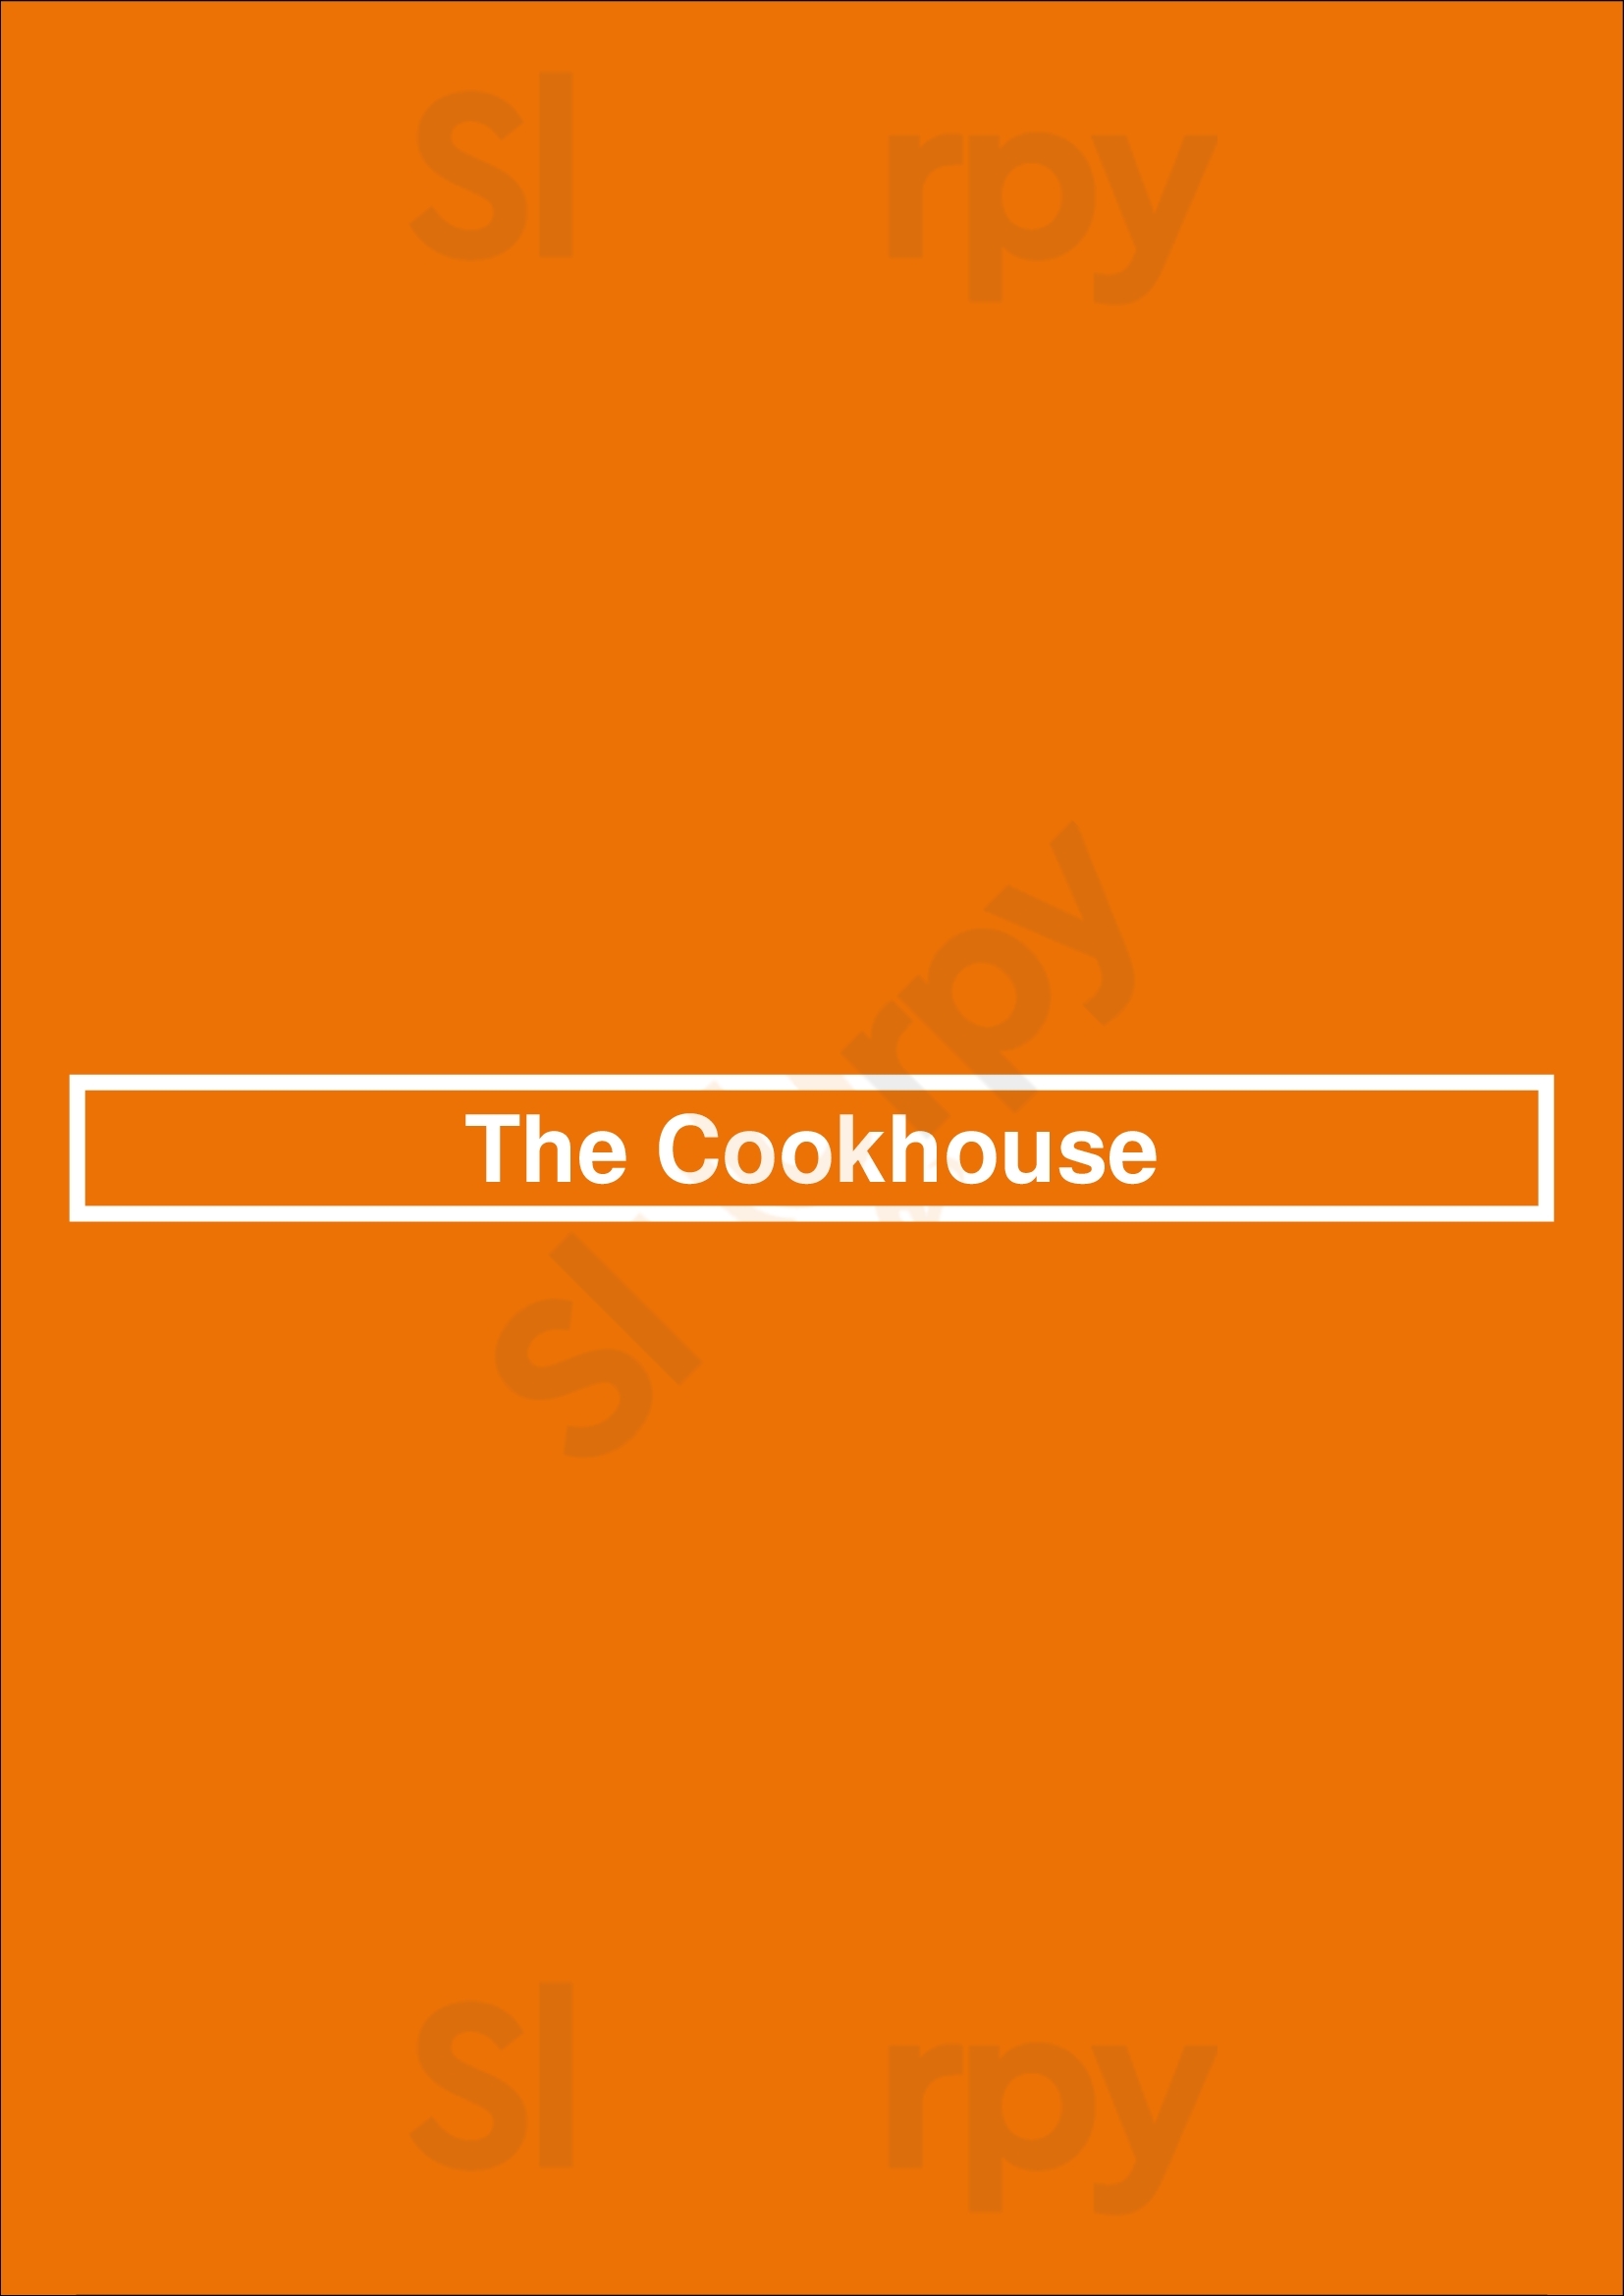 The Cookhouse San Antonio Menu - 1